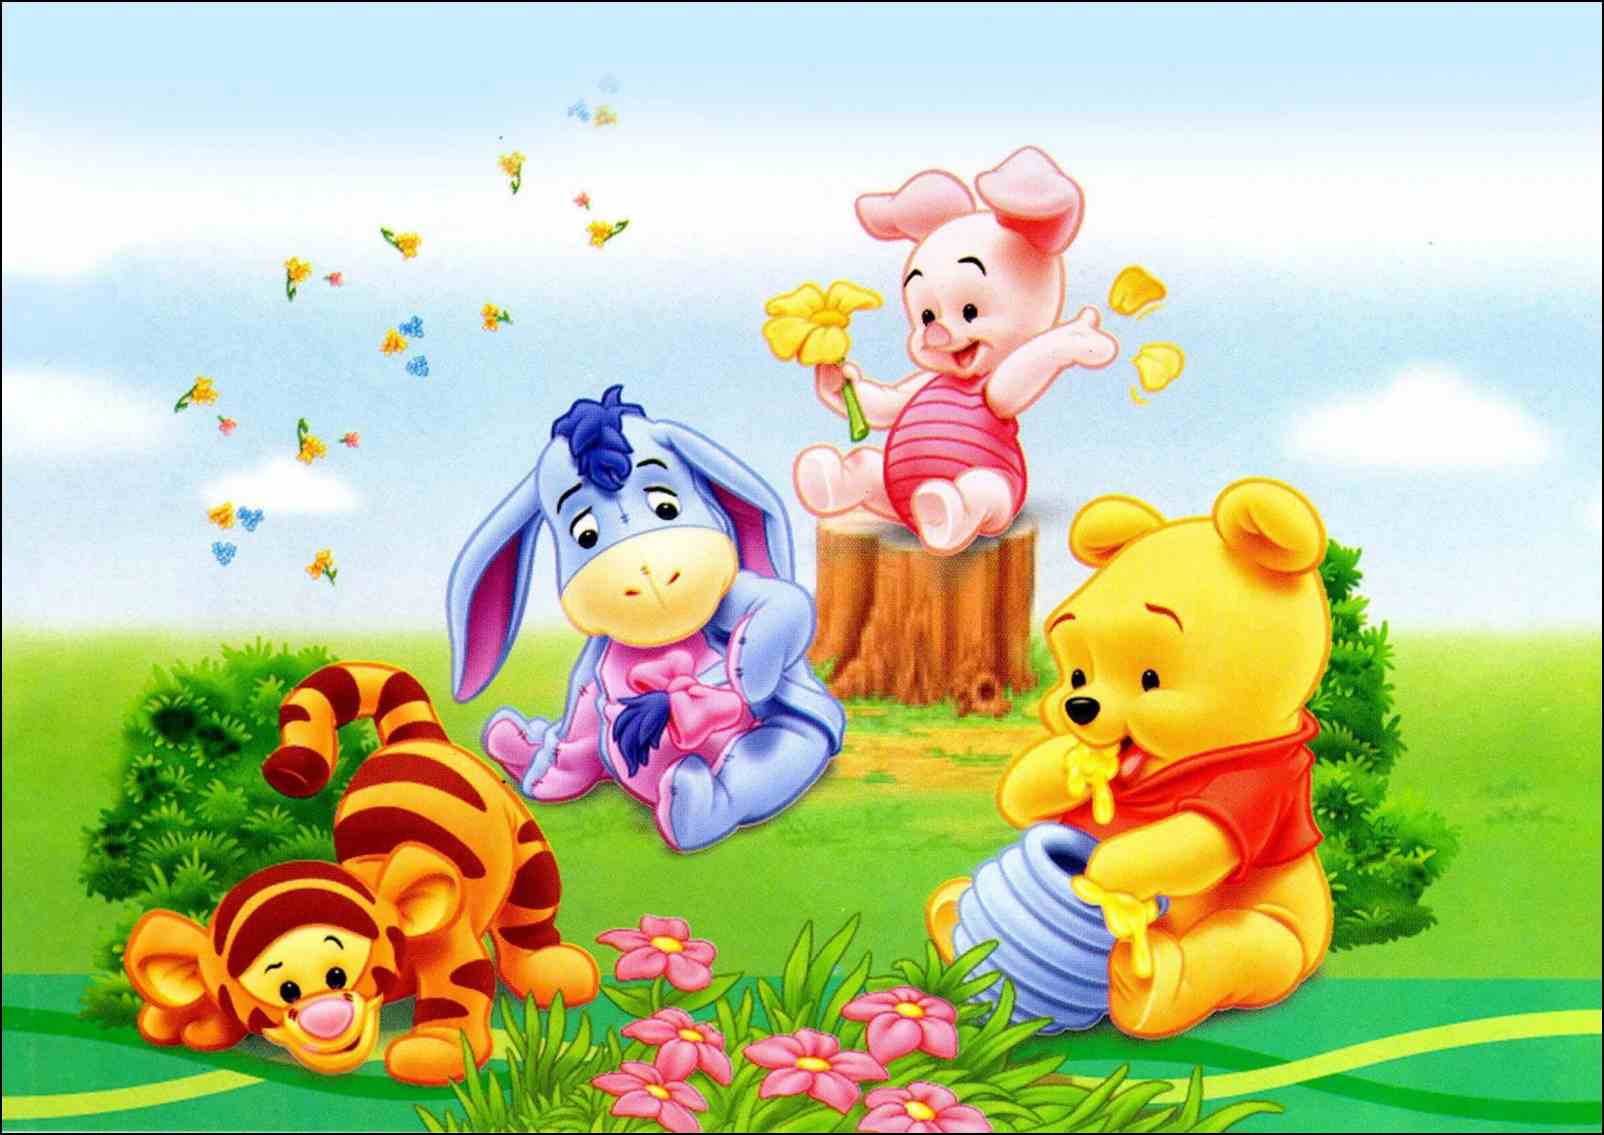 imagenes de winnie pooh